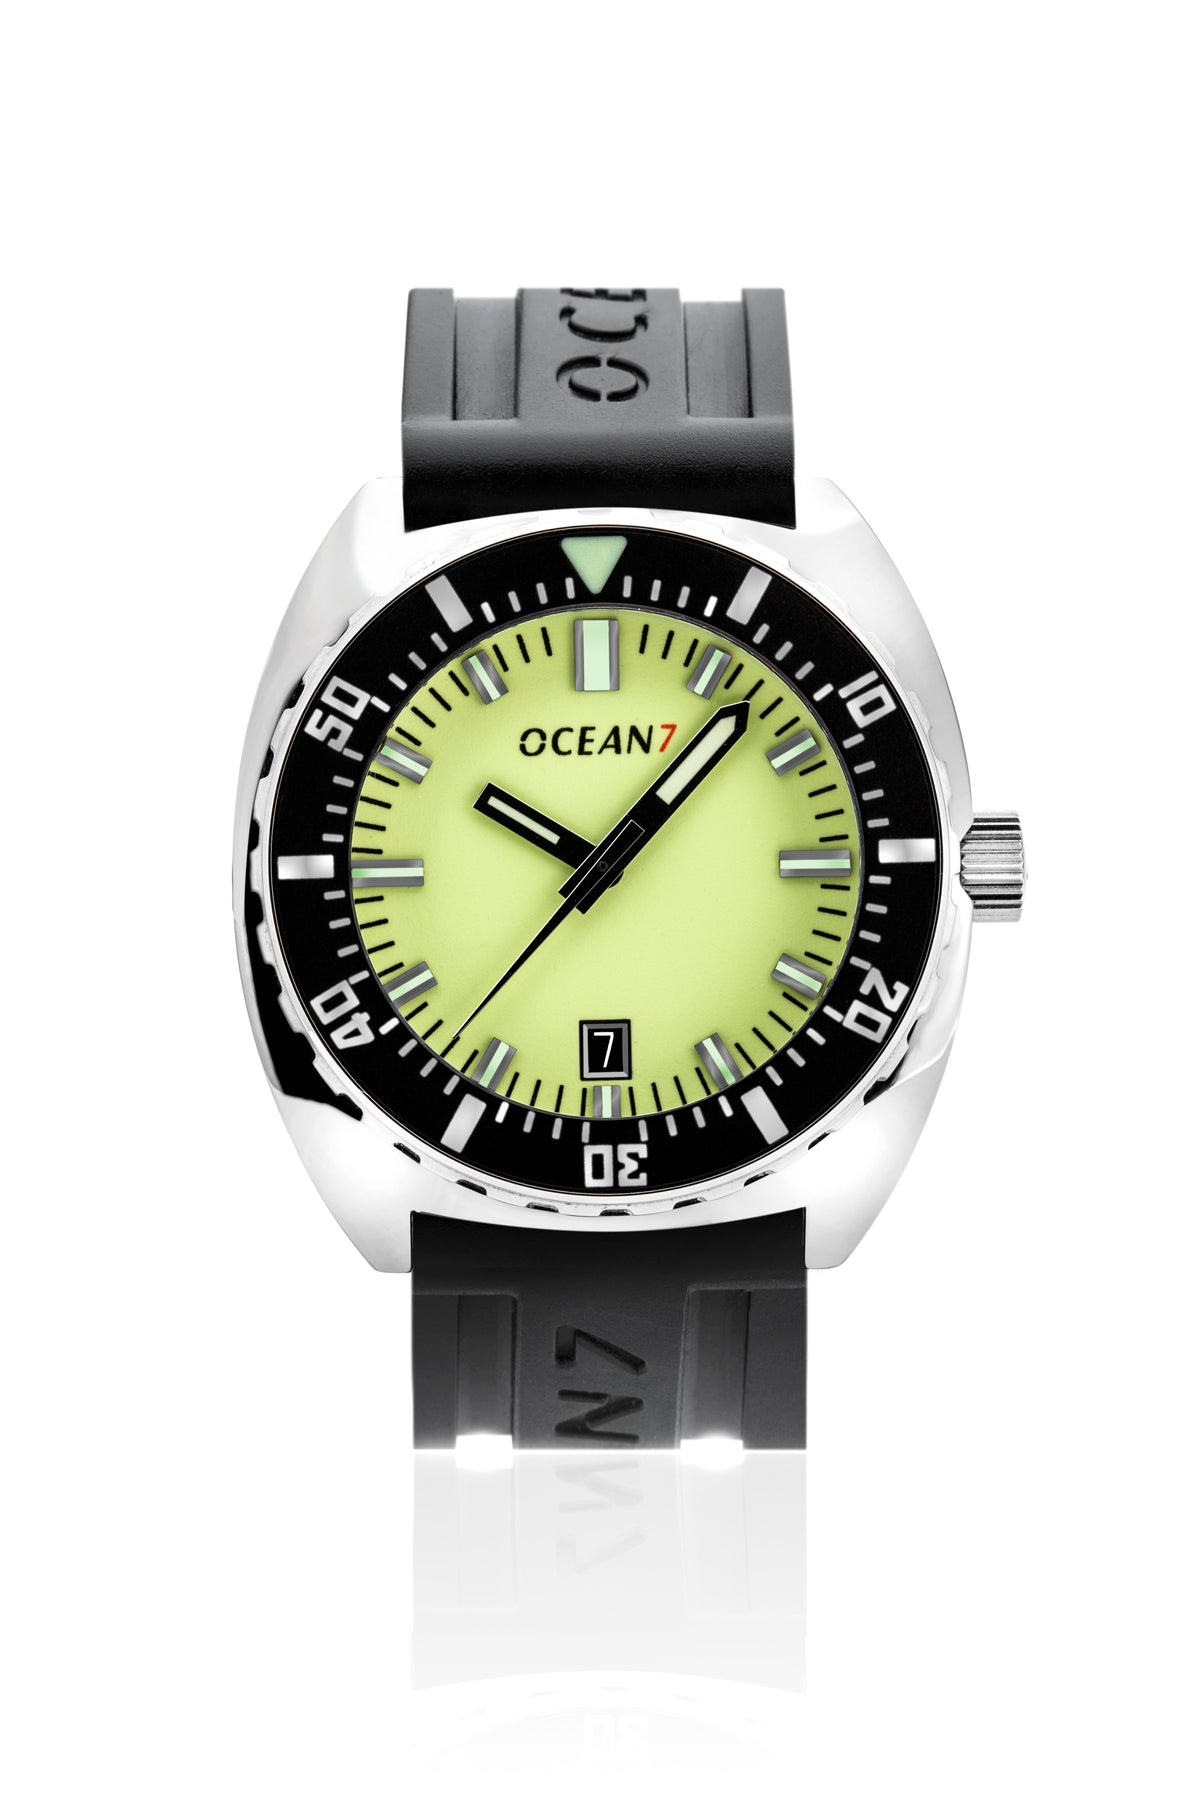 LM-3 V2 1250m Dive Watch